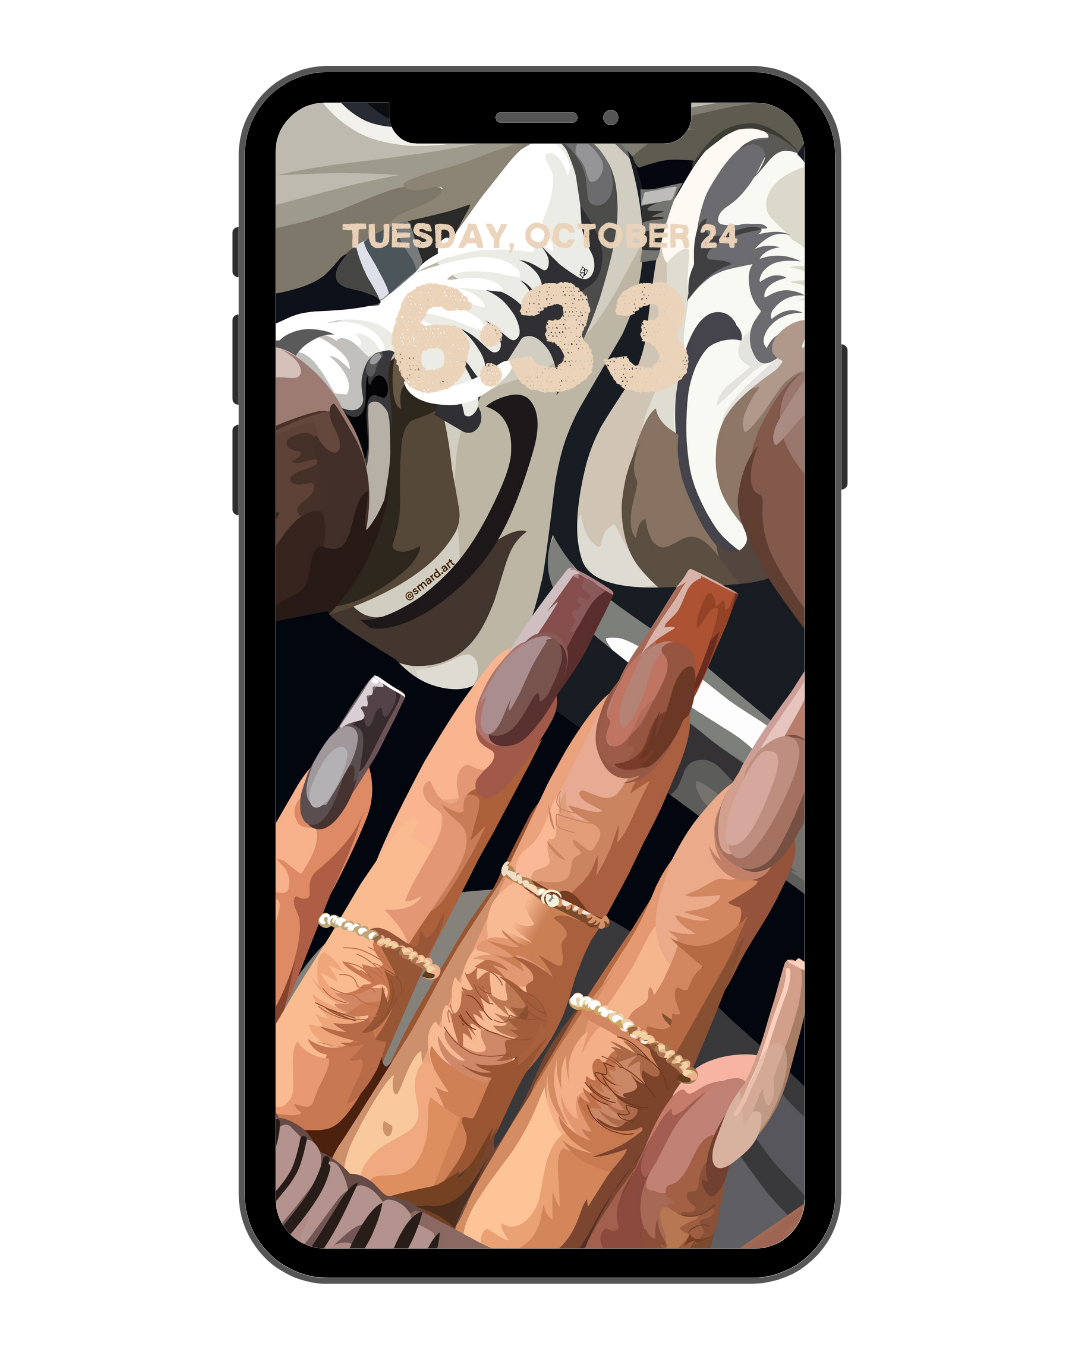 Nails Done - Phone Screensaver